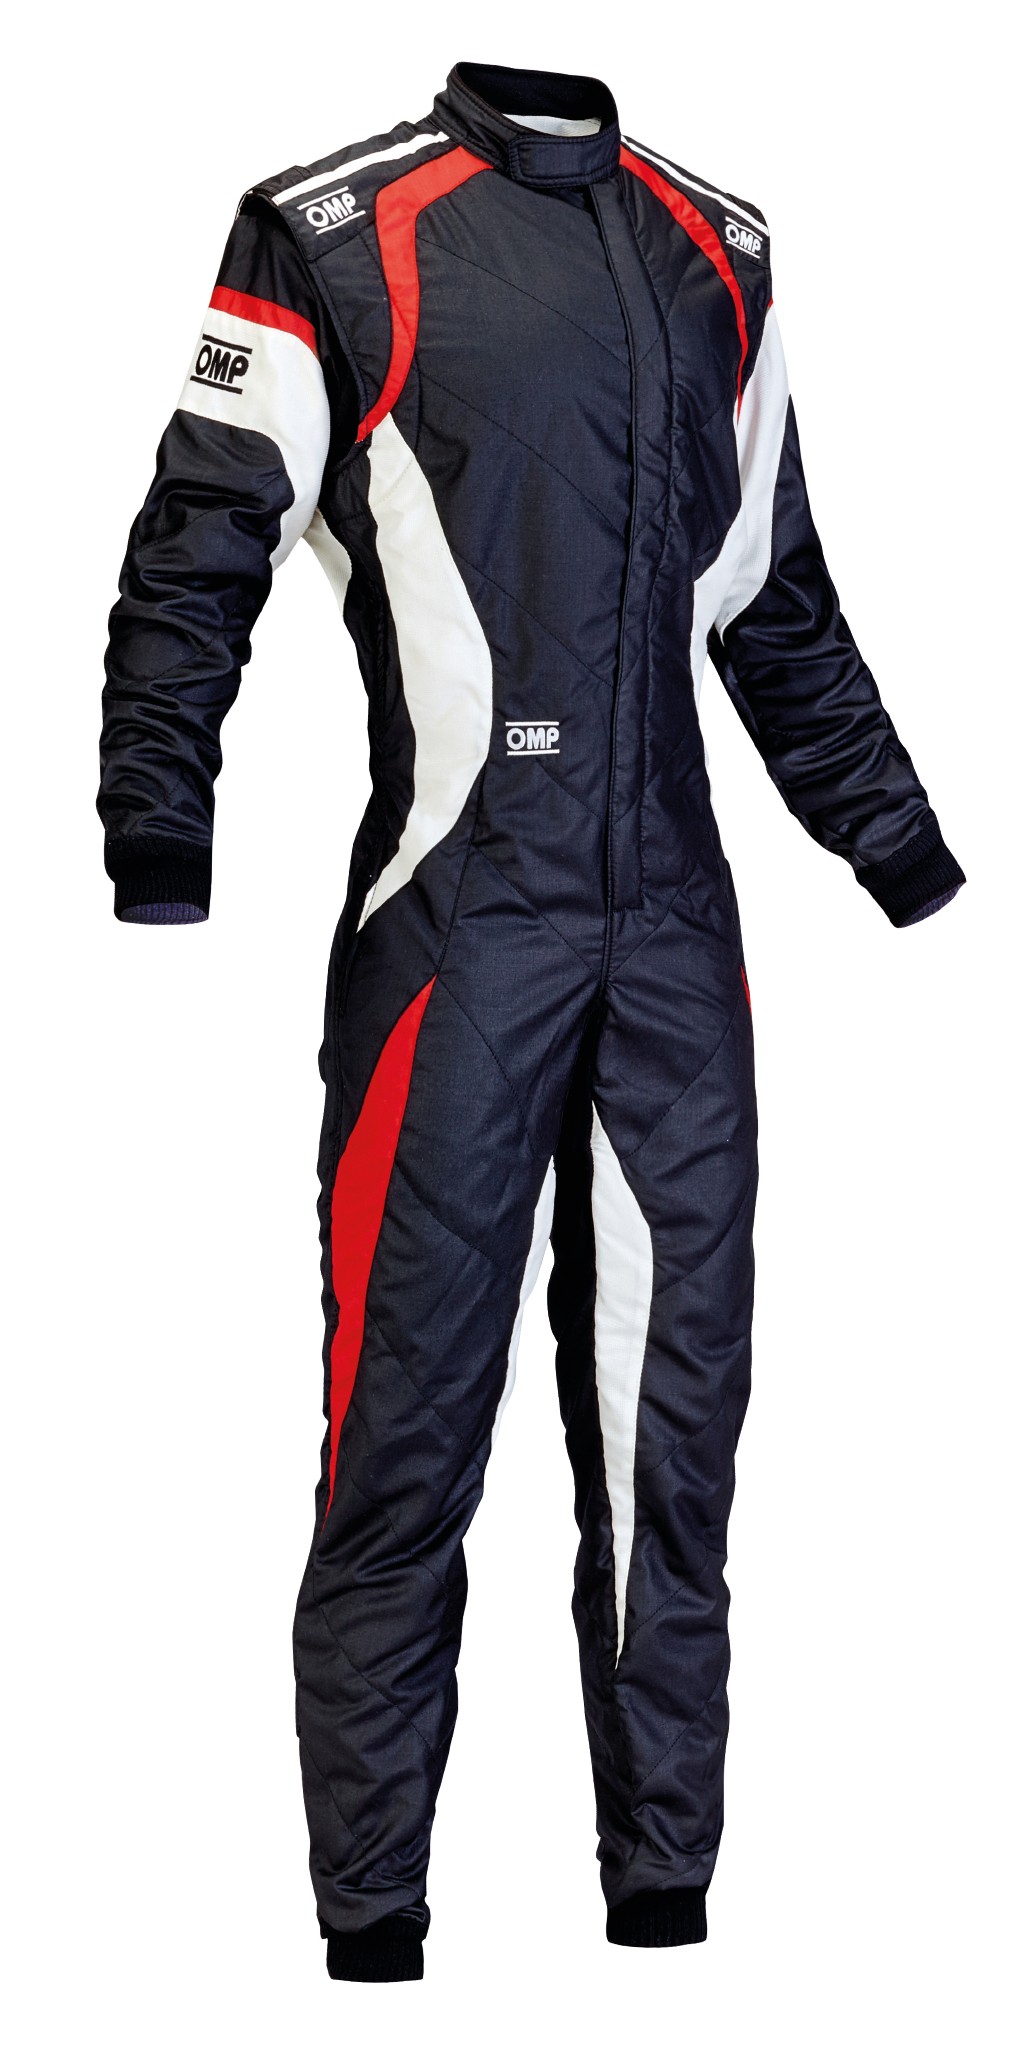 OMP IA0184424344 Tecnica Evo Racing Suit, Sky Blue/White, Size 44 